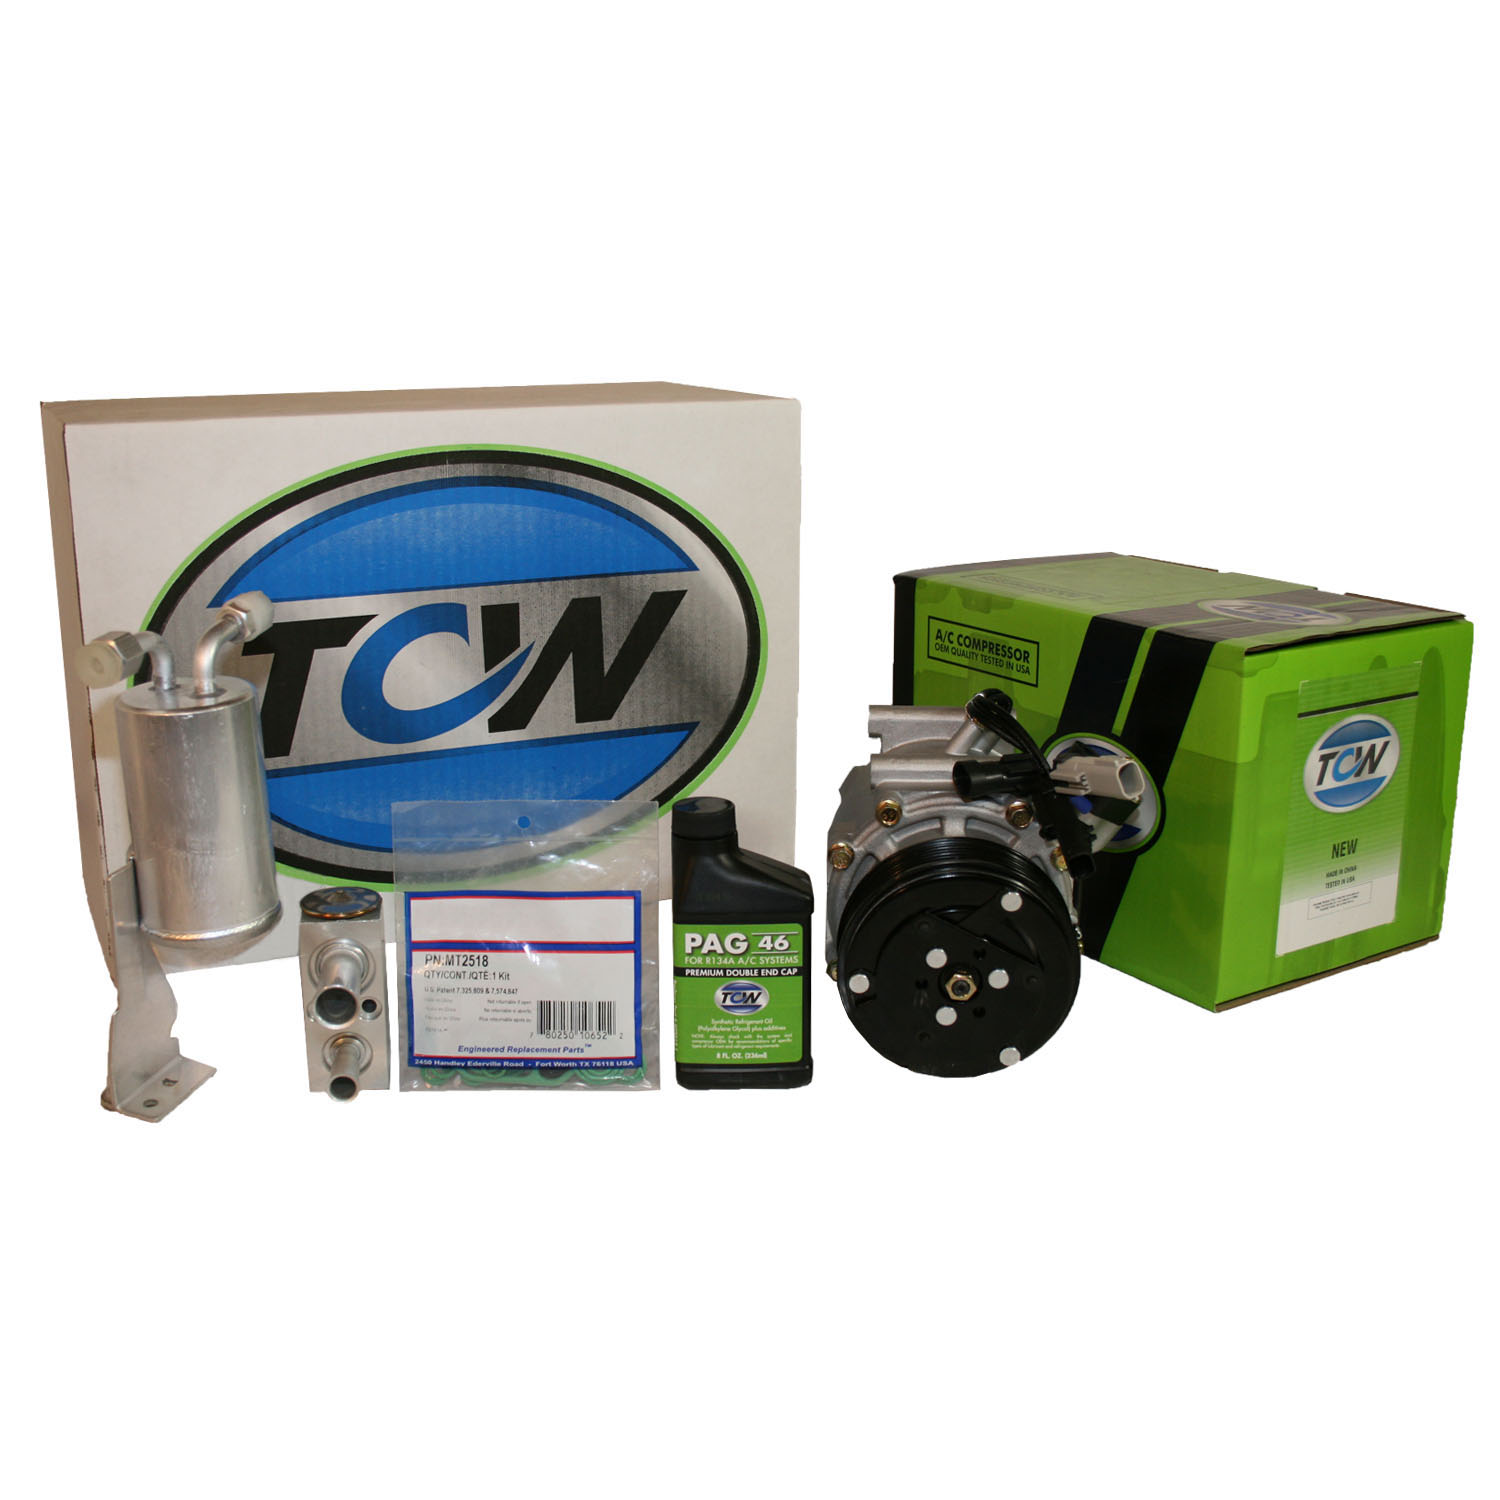 TCW Vehicle A/C Kit K1000467N New Product Image field_60b6a13a6e67c